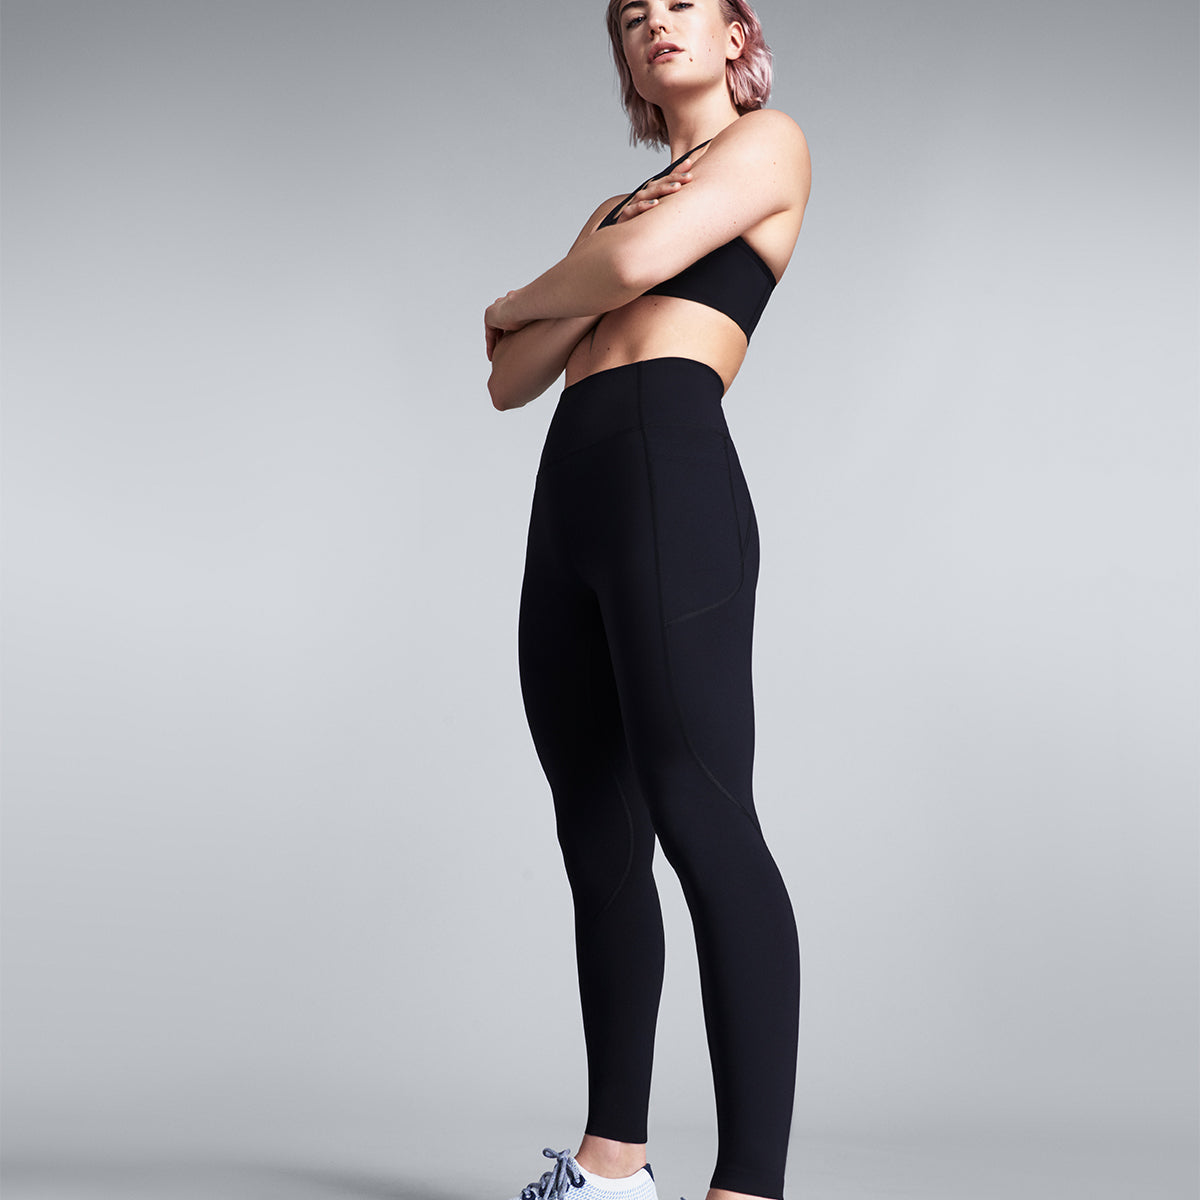 LNDR Black Yoga Pants Size XS - Sm - 80% off